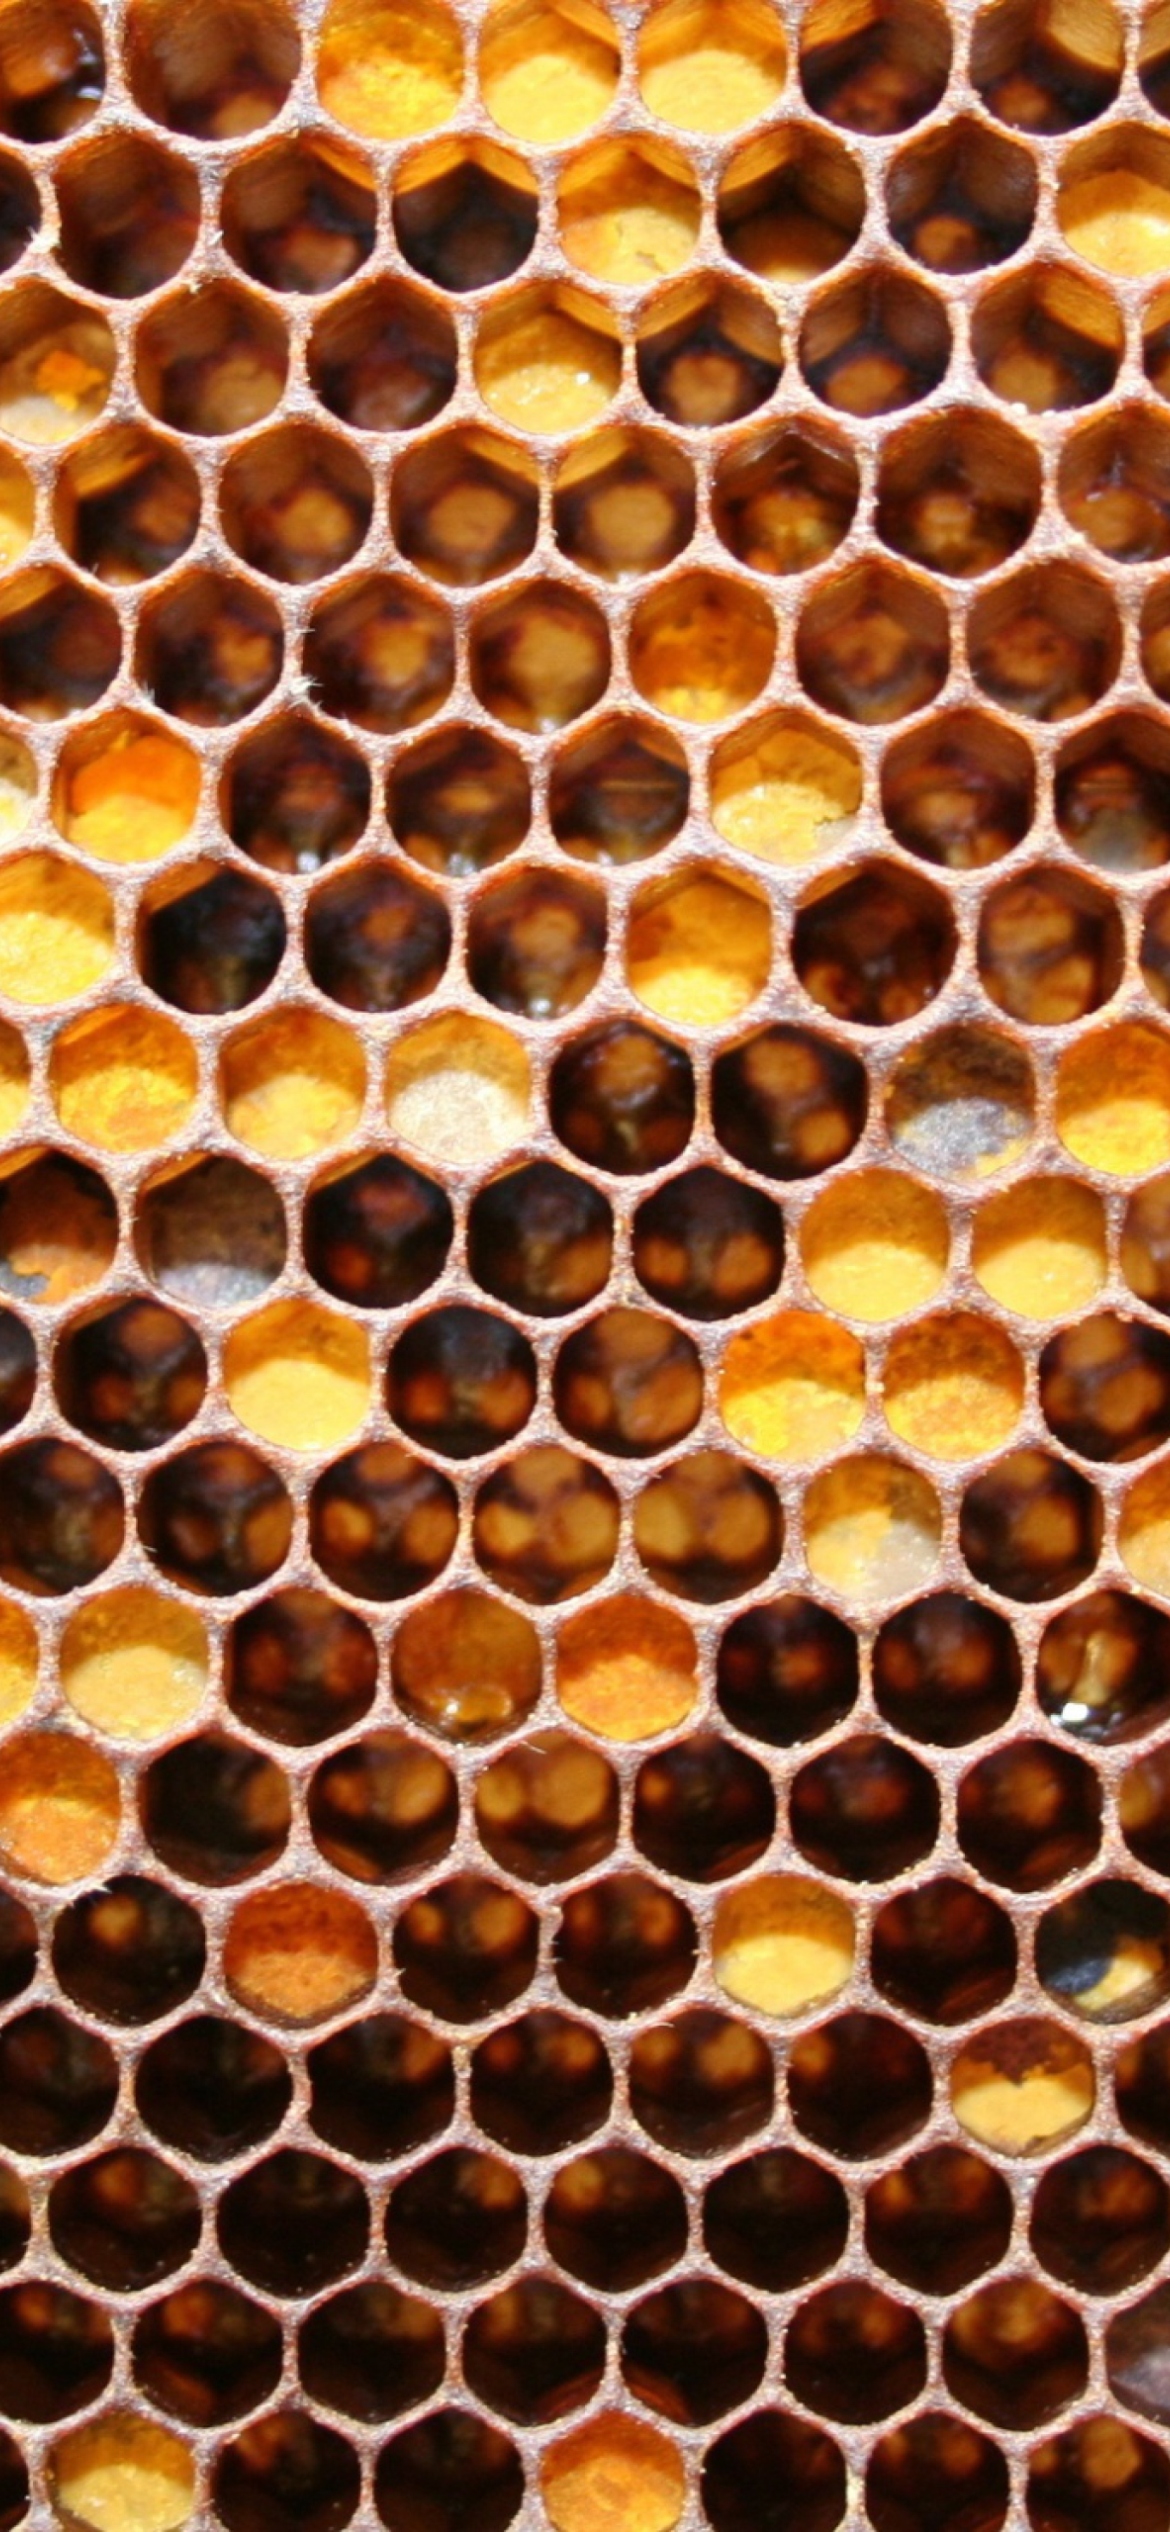 Honey wallpaper 1170x2532